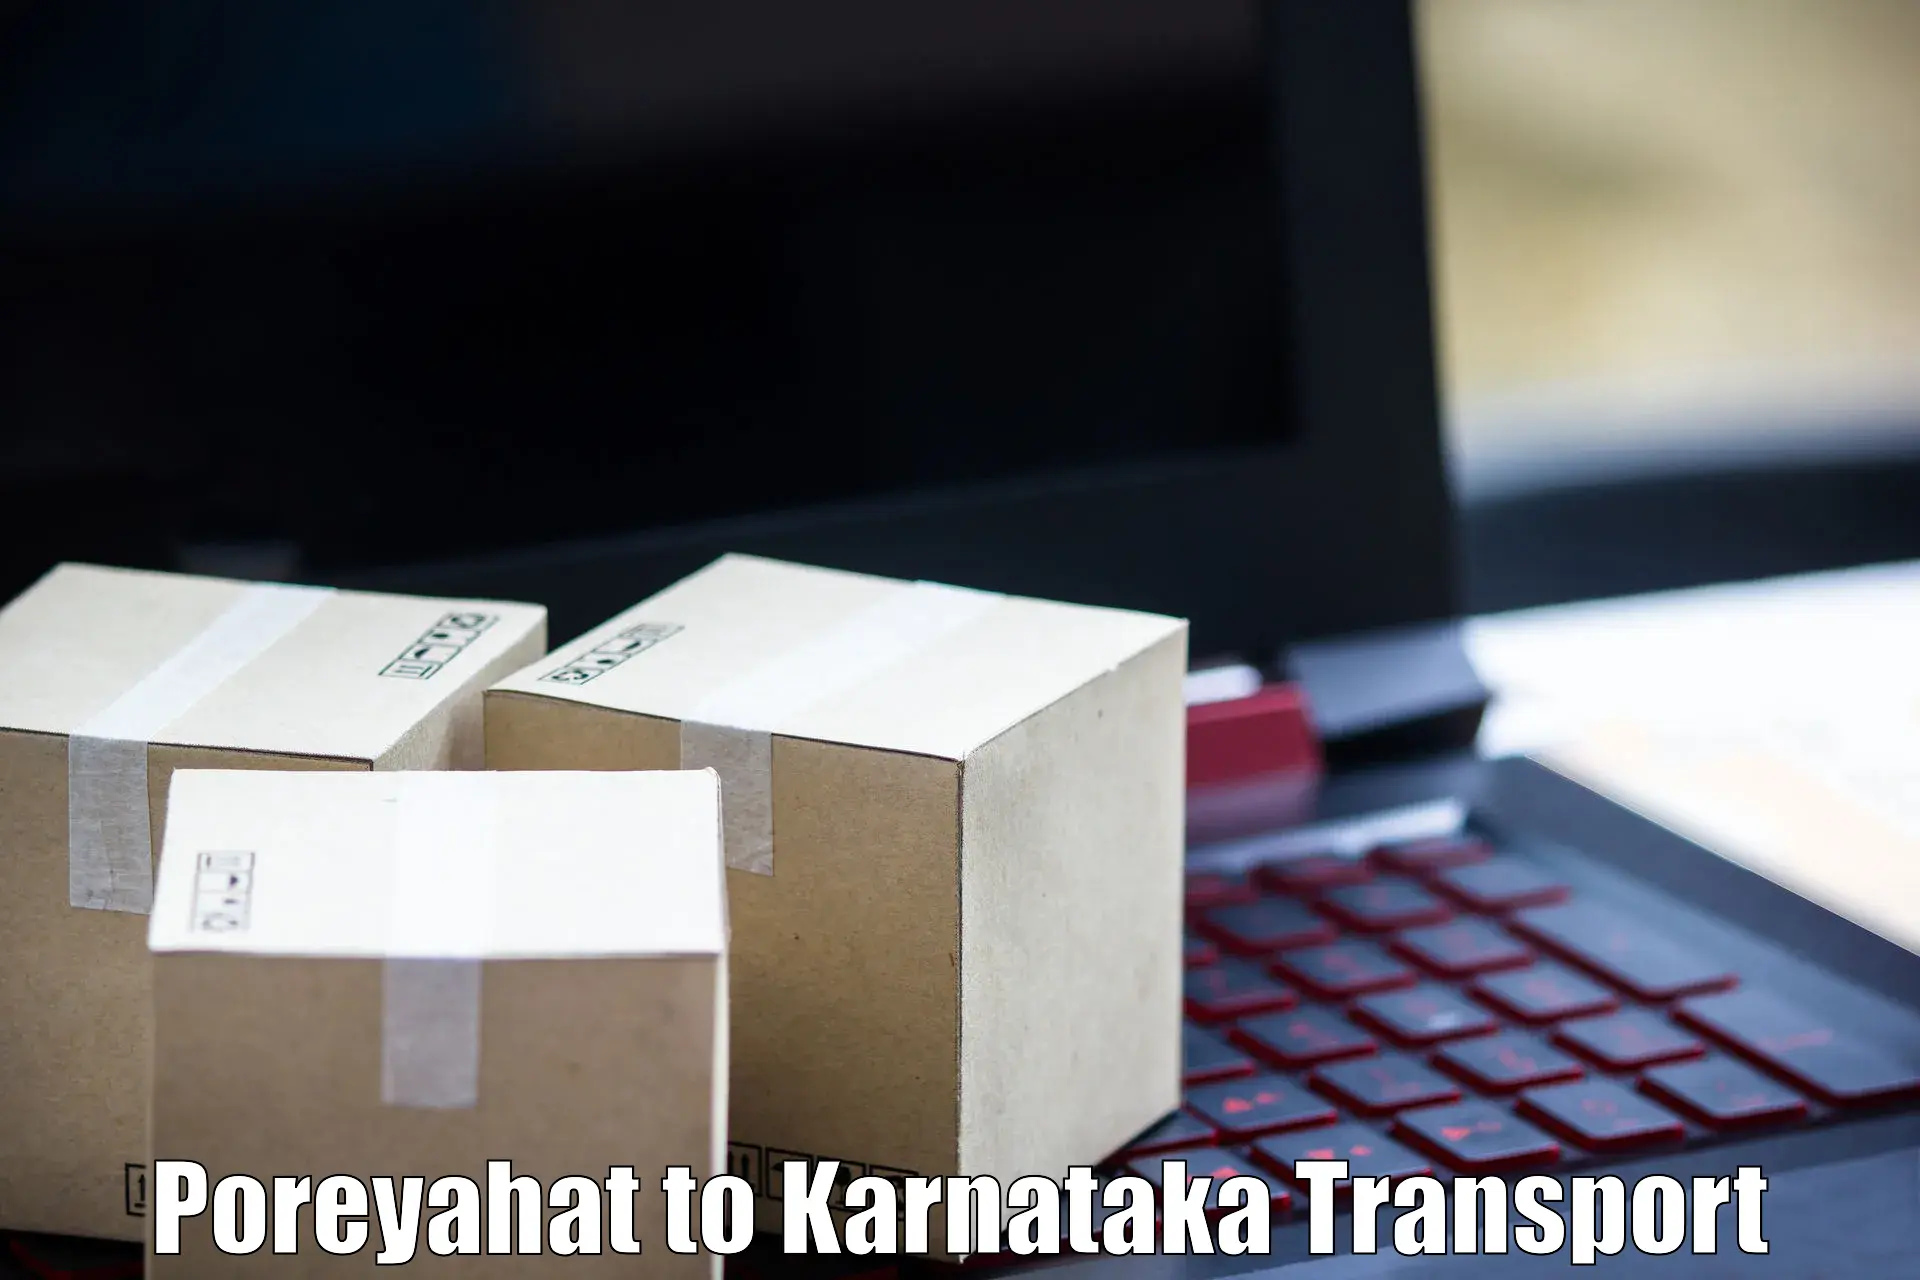 Commercial transport service Poreyahat to Rajajinagar